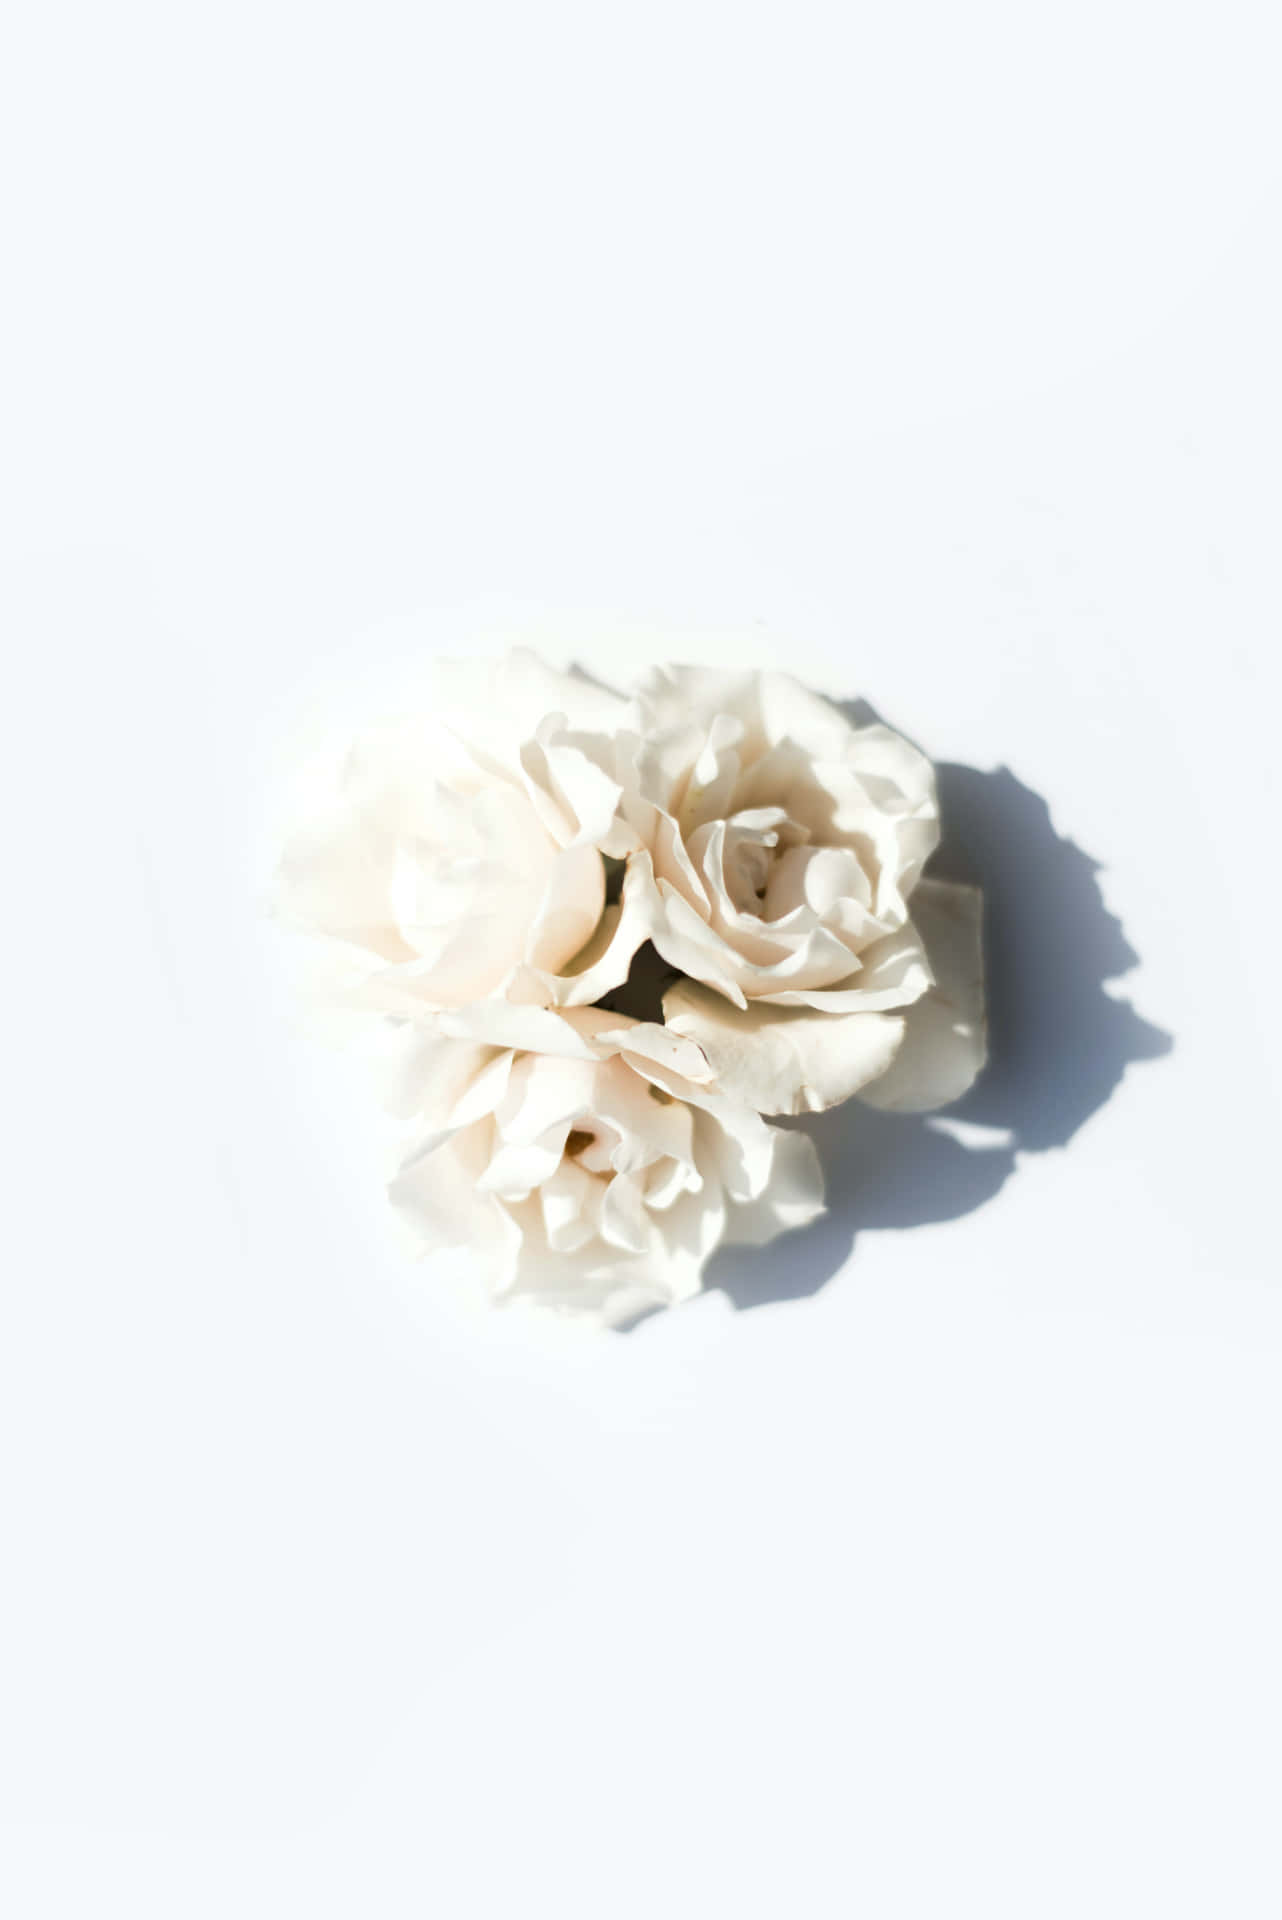 Retratode Rosas Blancas En Fondo Blanco